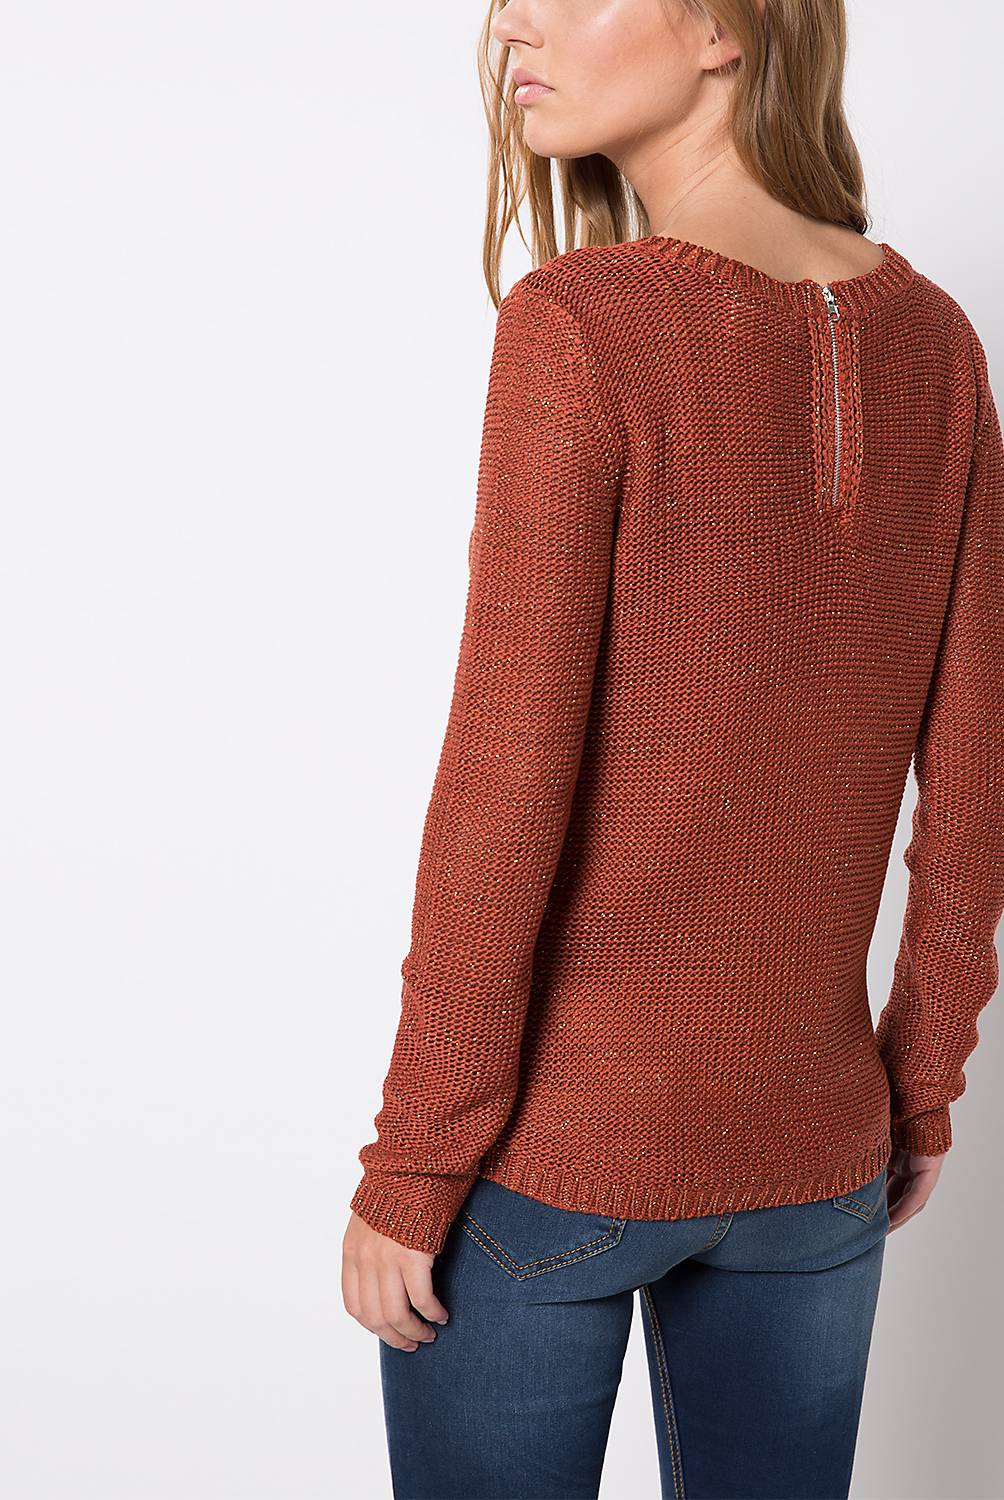 DENIMLAB - Sweater Lurex